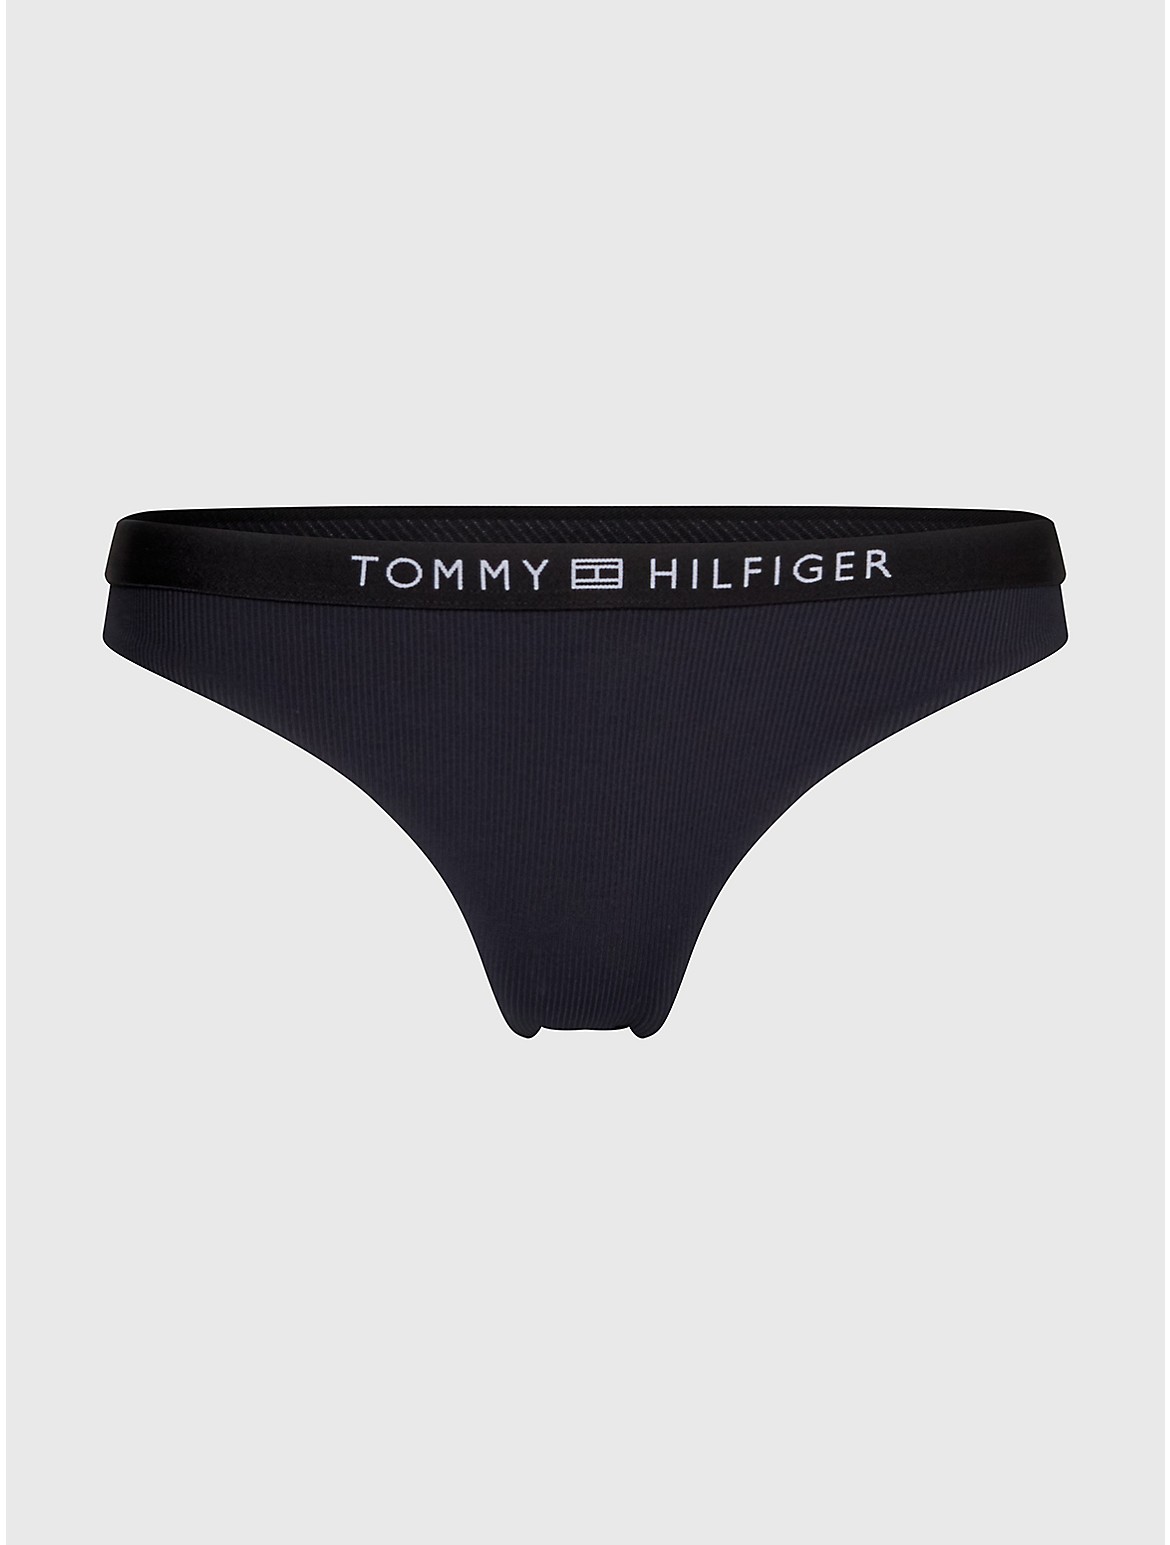 Tommy Hilfiger Women's Logo Bikini Bottom - Black - XS